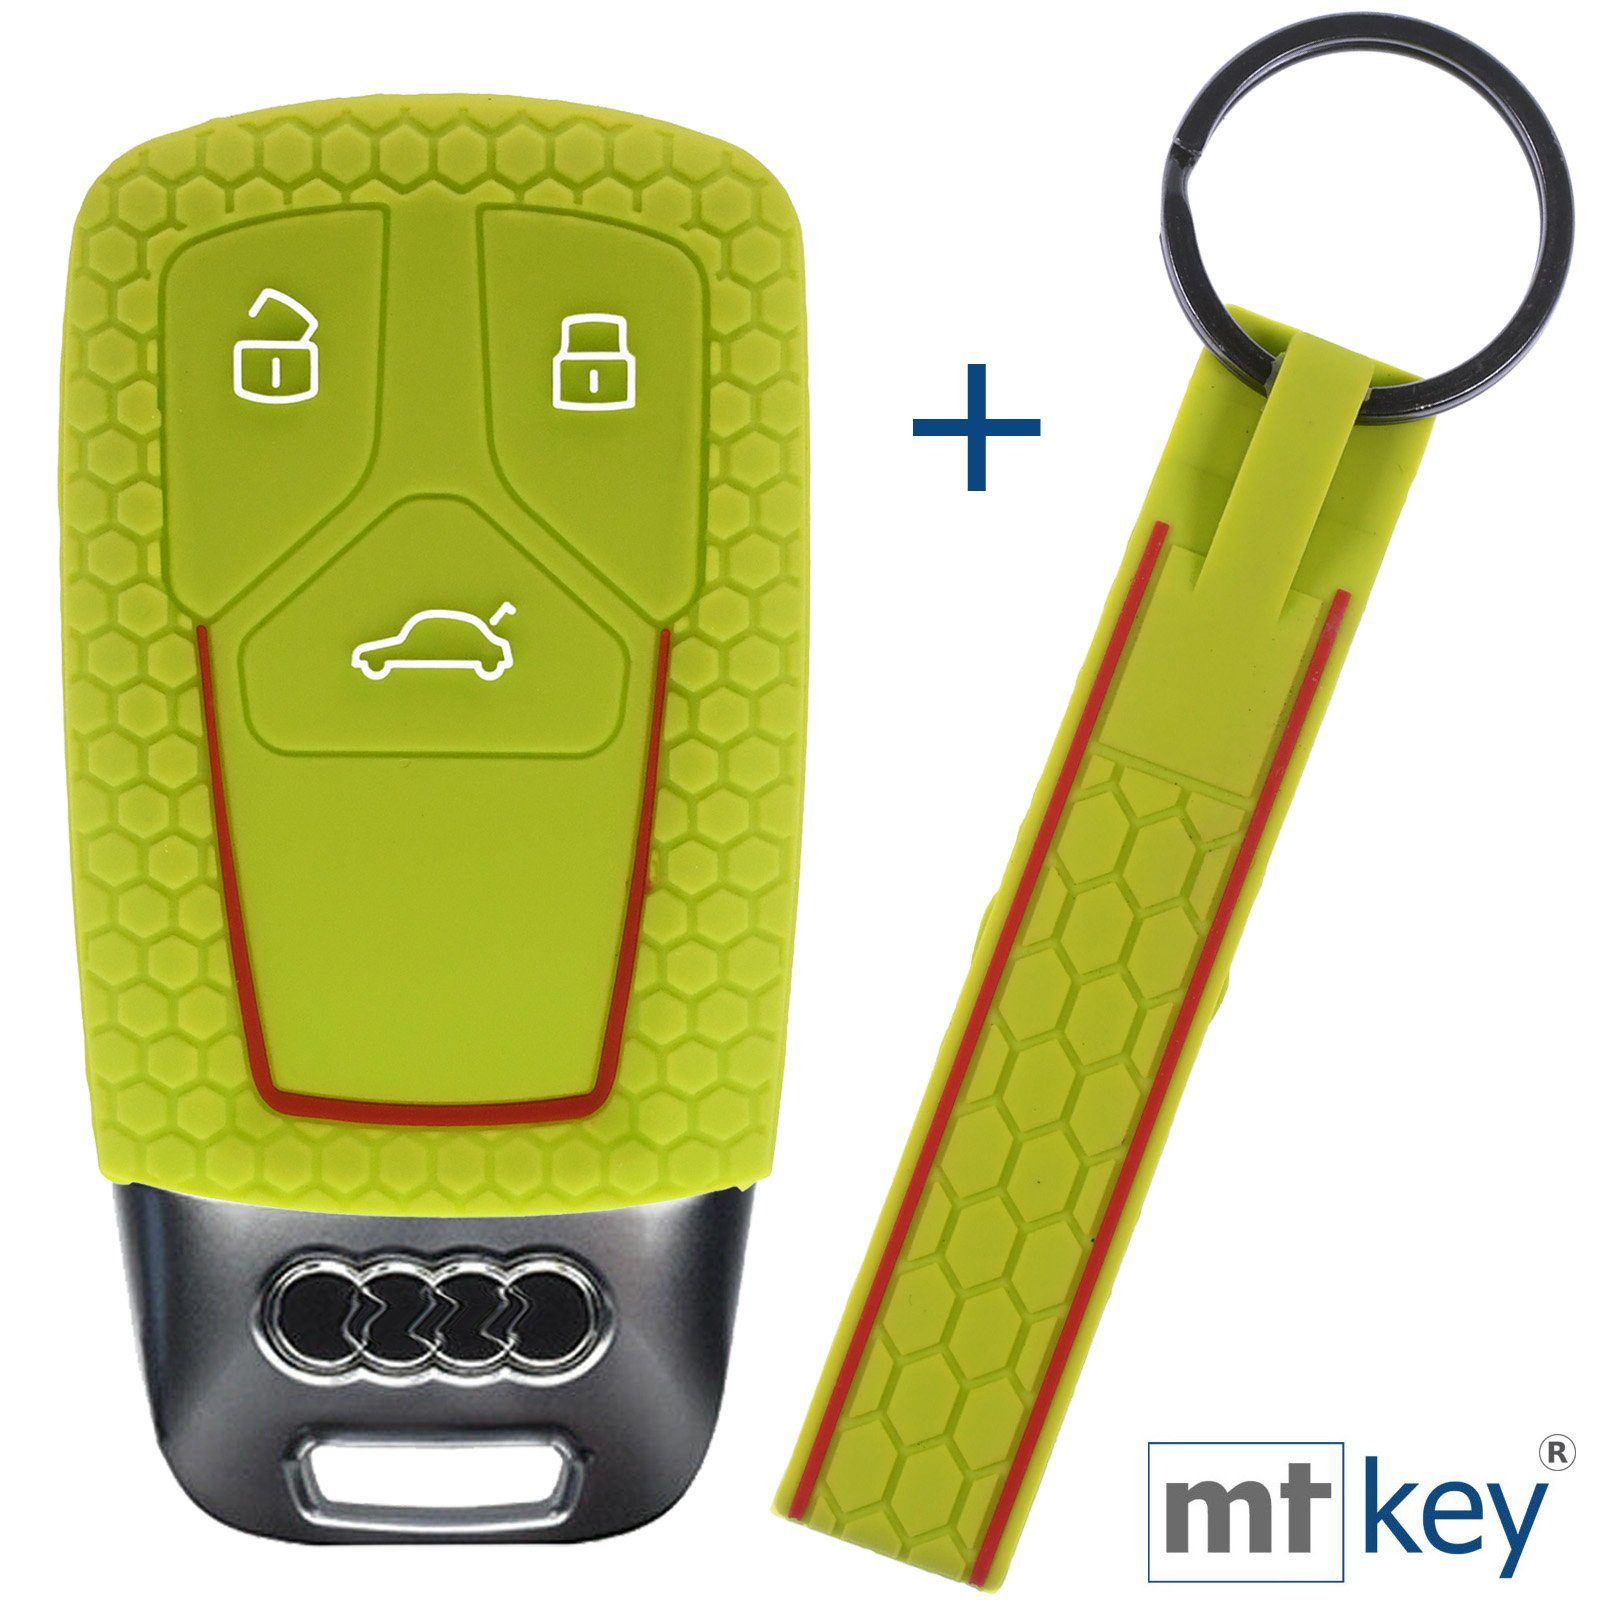 mt-key Schlüsseltasche Autoschlüssel Silikon Schutzhülle im Wabe Design Apfelgrün + Keytag, für Audi A4 A5 A6 A7 TT Q2 Q5 Q7 A8 Q8 3 Tasten KEYLESS SMARTKEY